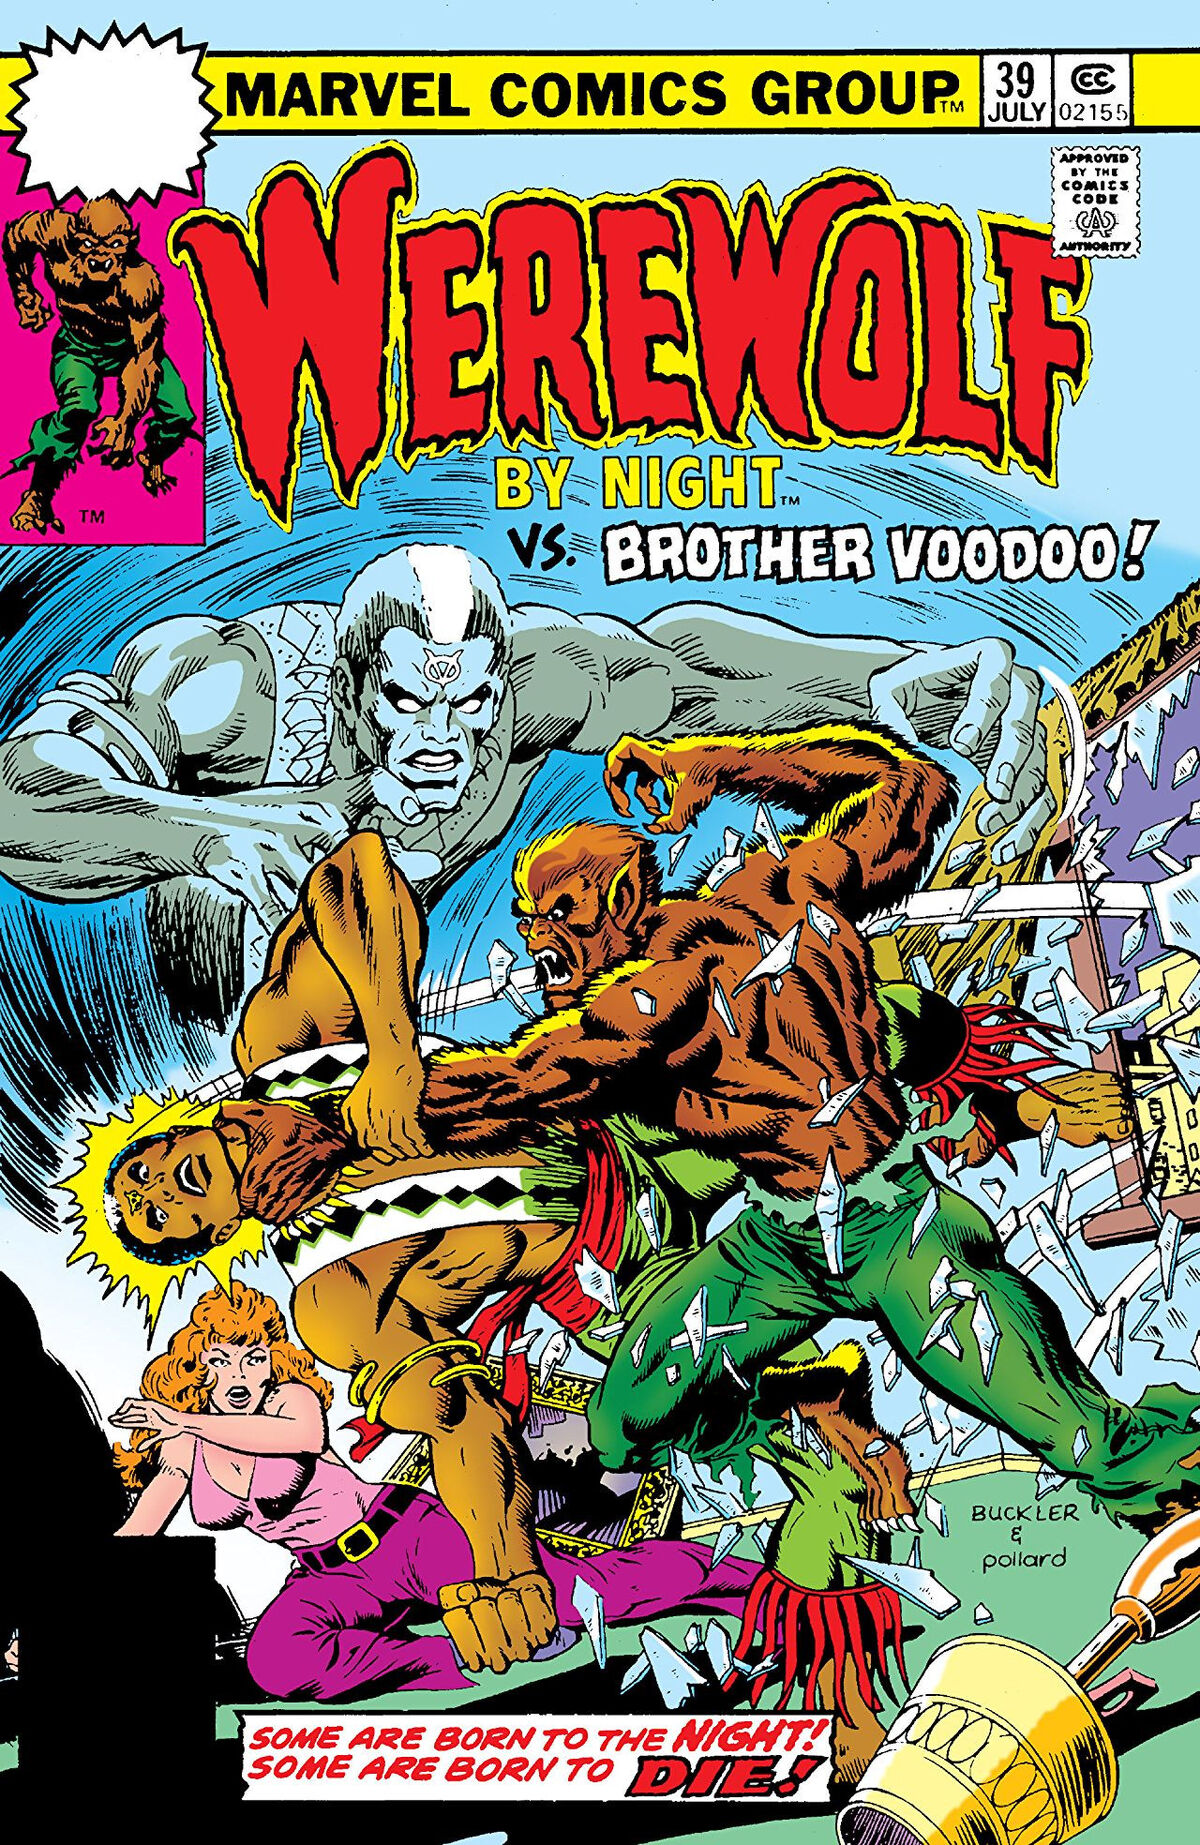 Werewolf by Night Vol 1 3, Marvel Database